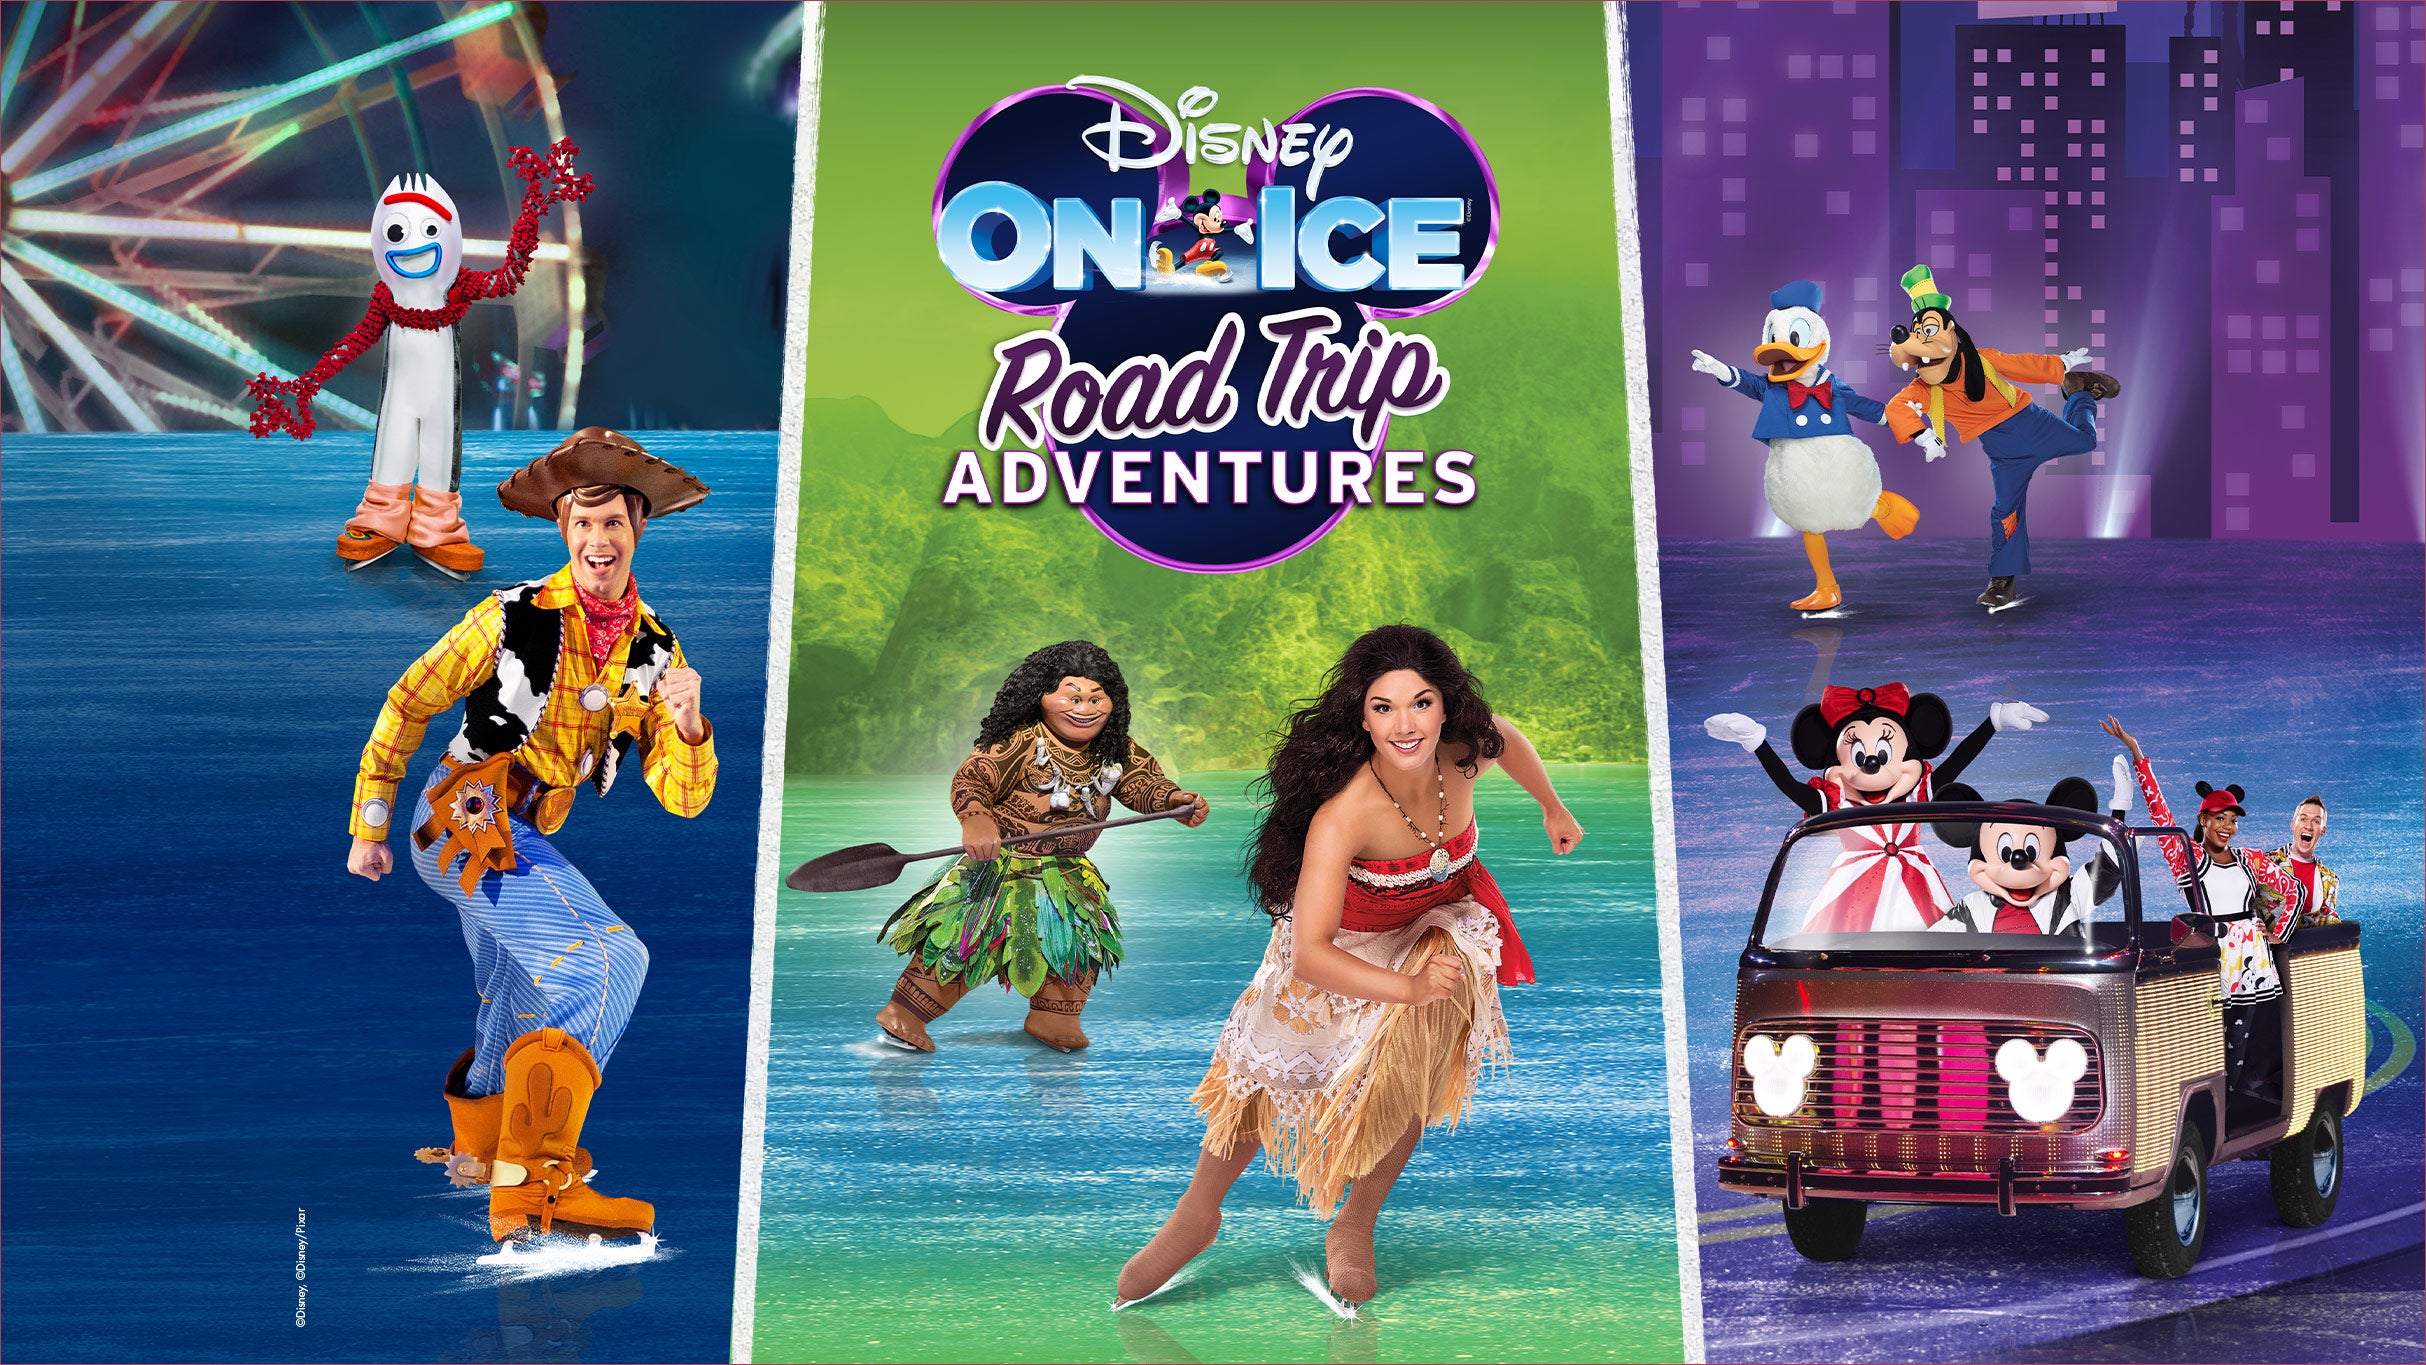 Disney On Ice presents Road Trip Adventures in London promo photo for Feld Presale Priority presale offer code